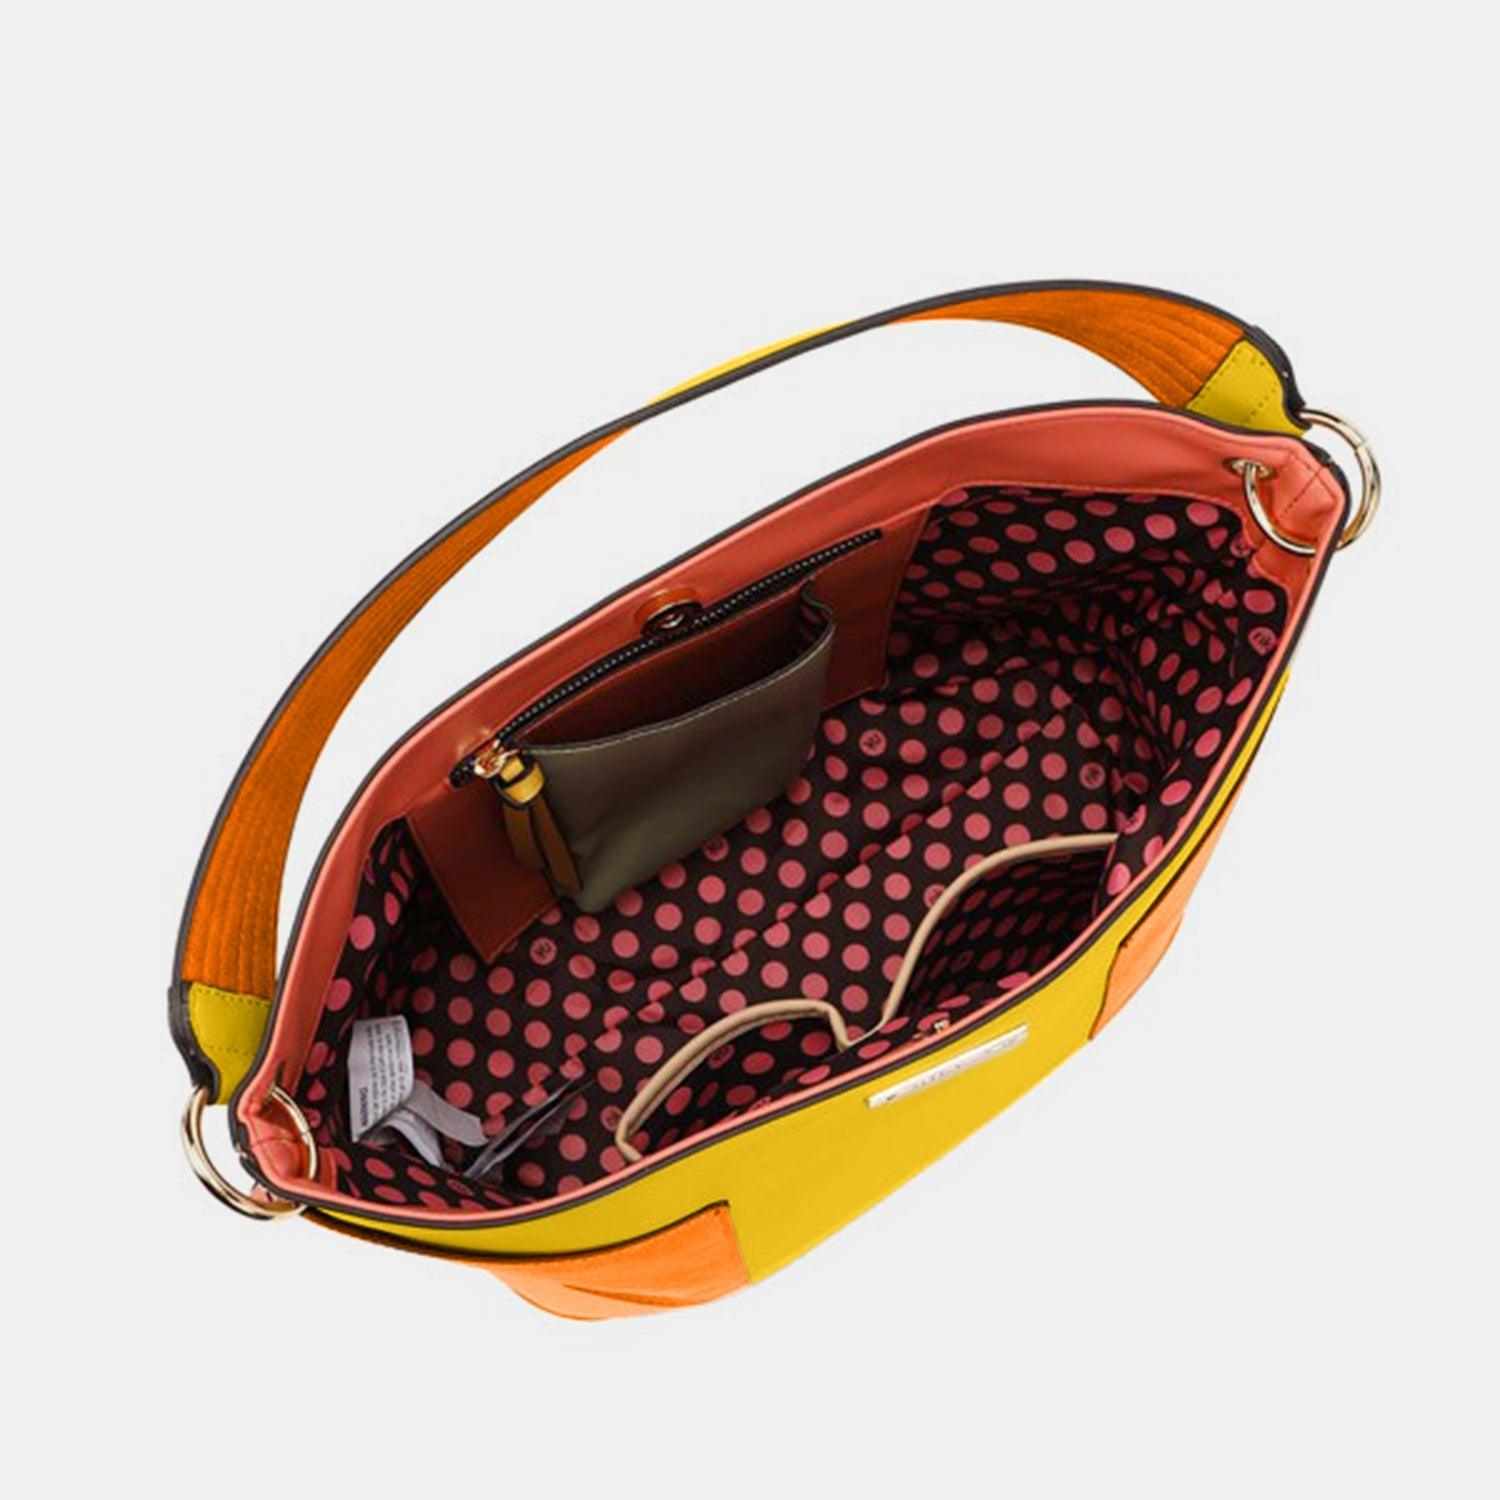 a handbag with a yellow handle and a polka dot pattern